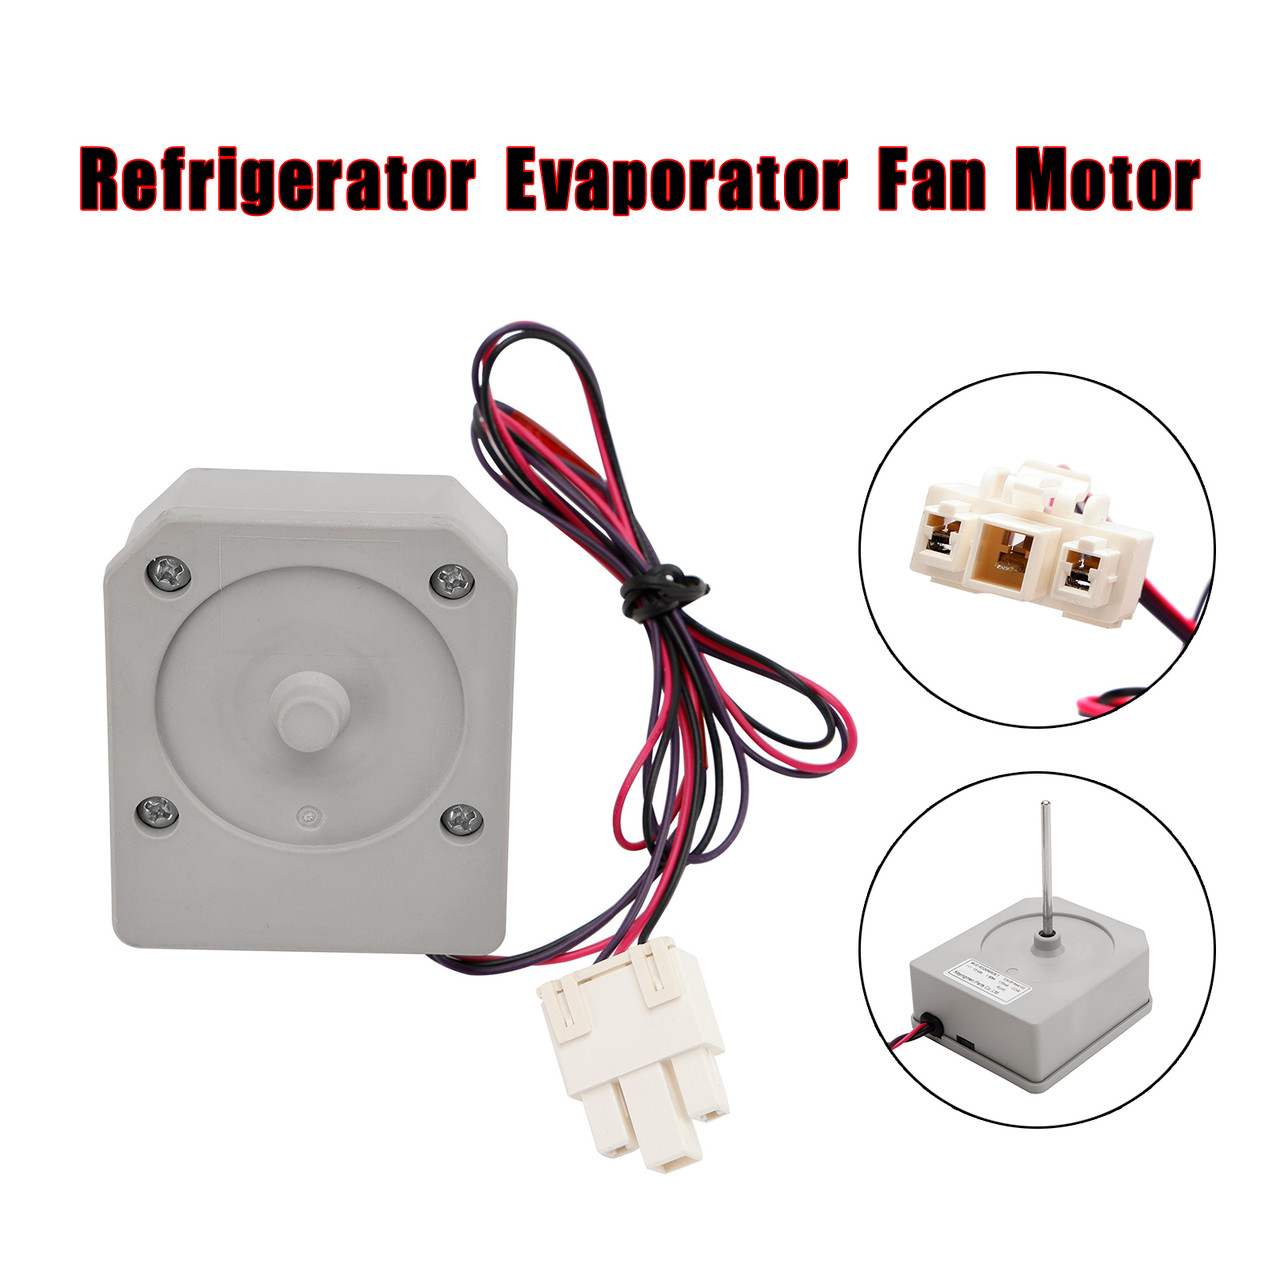 Refrigerator Evaporator Condenser Fan Motor Replacement For LG EAU61644102